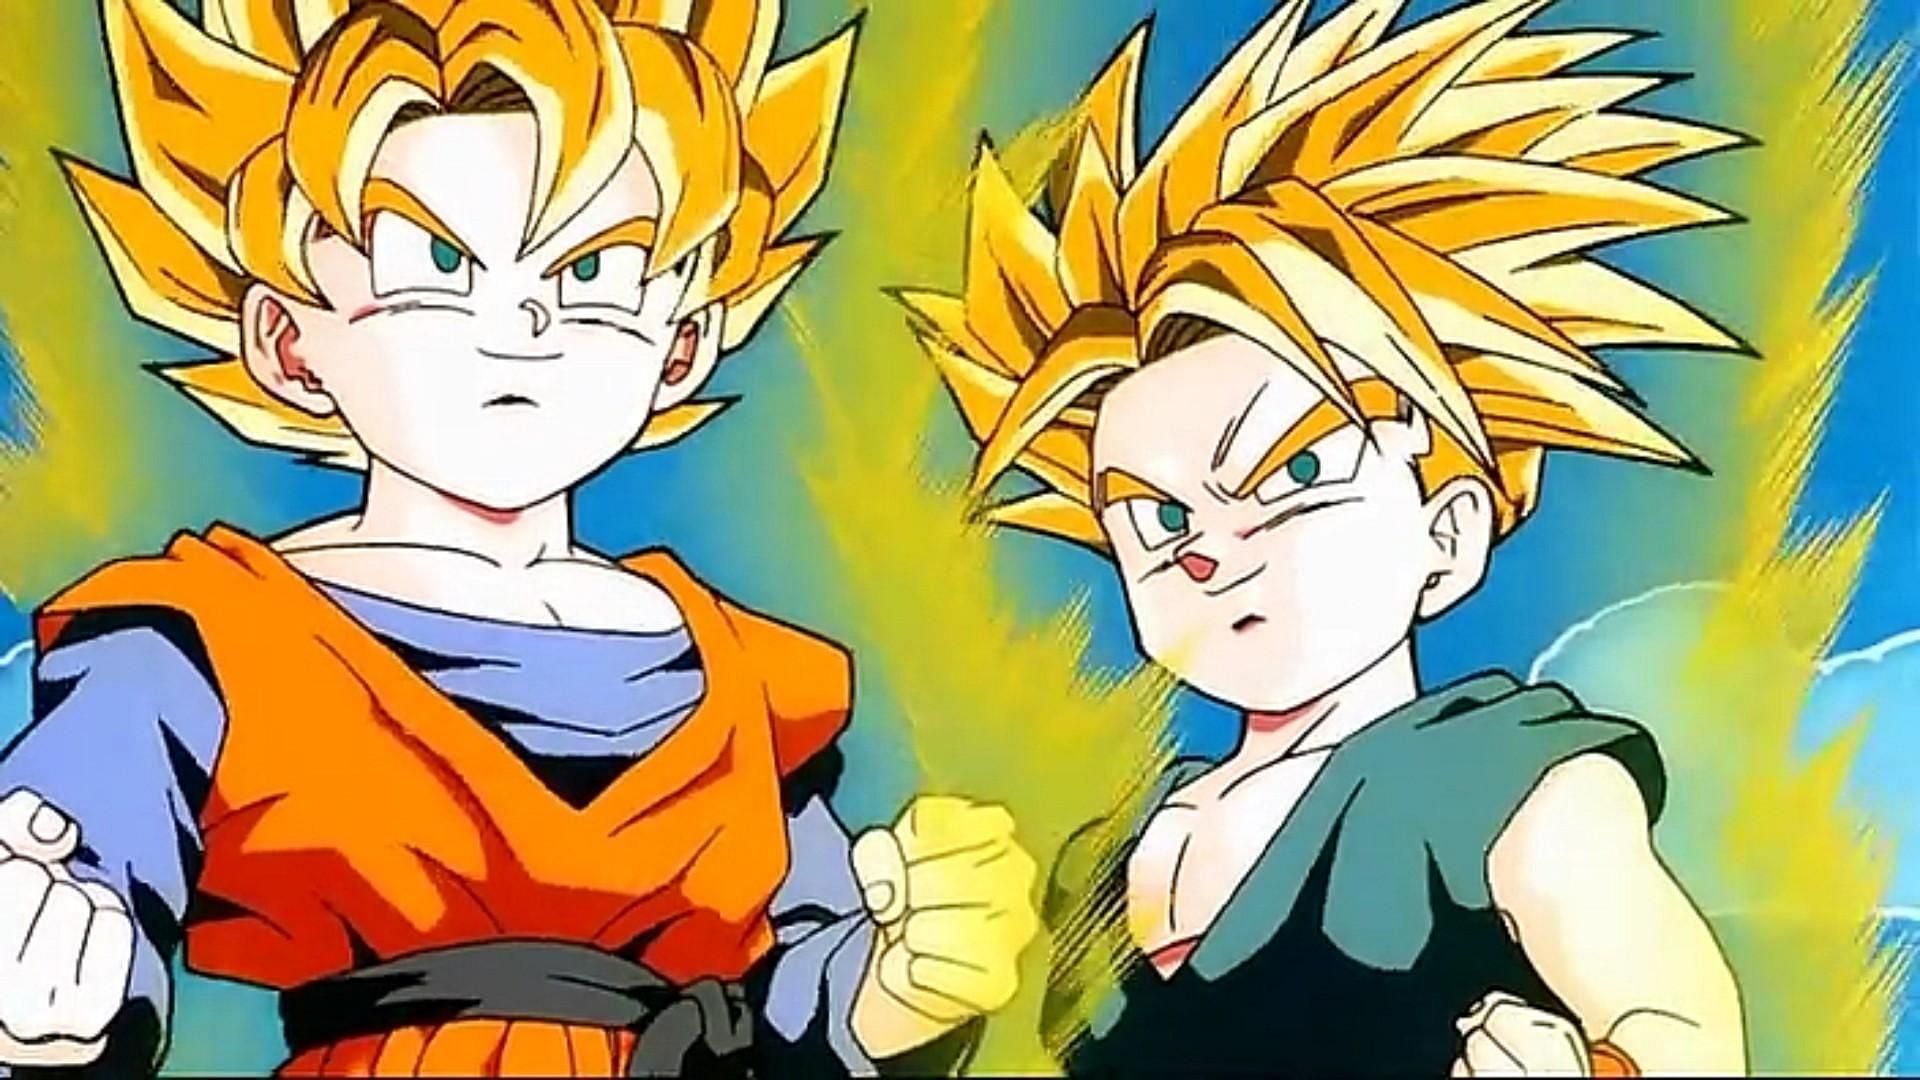 Dragon Ball Super chapter 88 spoiler reveals Goku & Vegeta's next big move